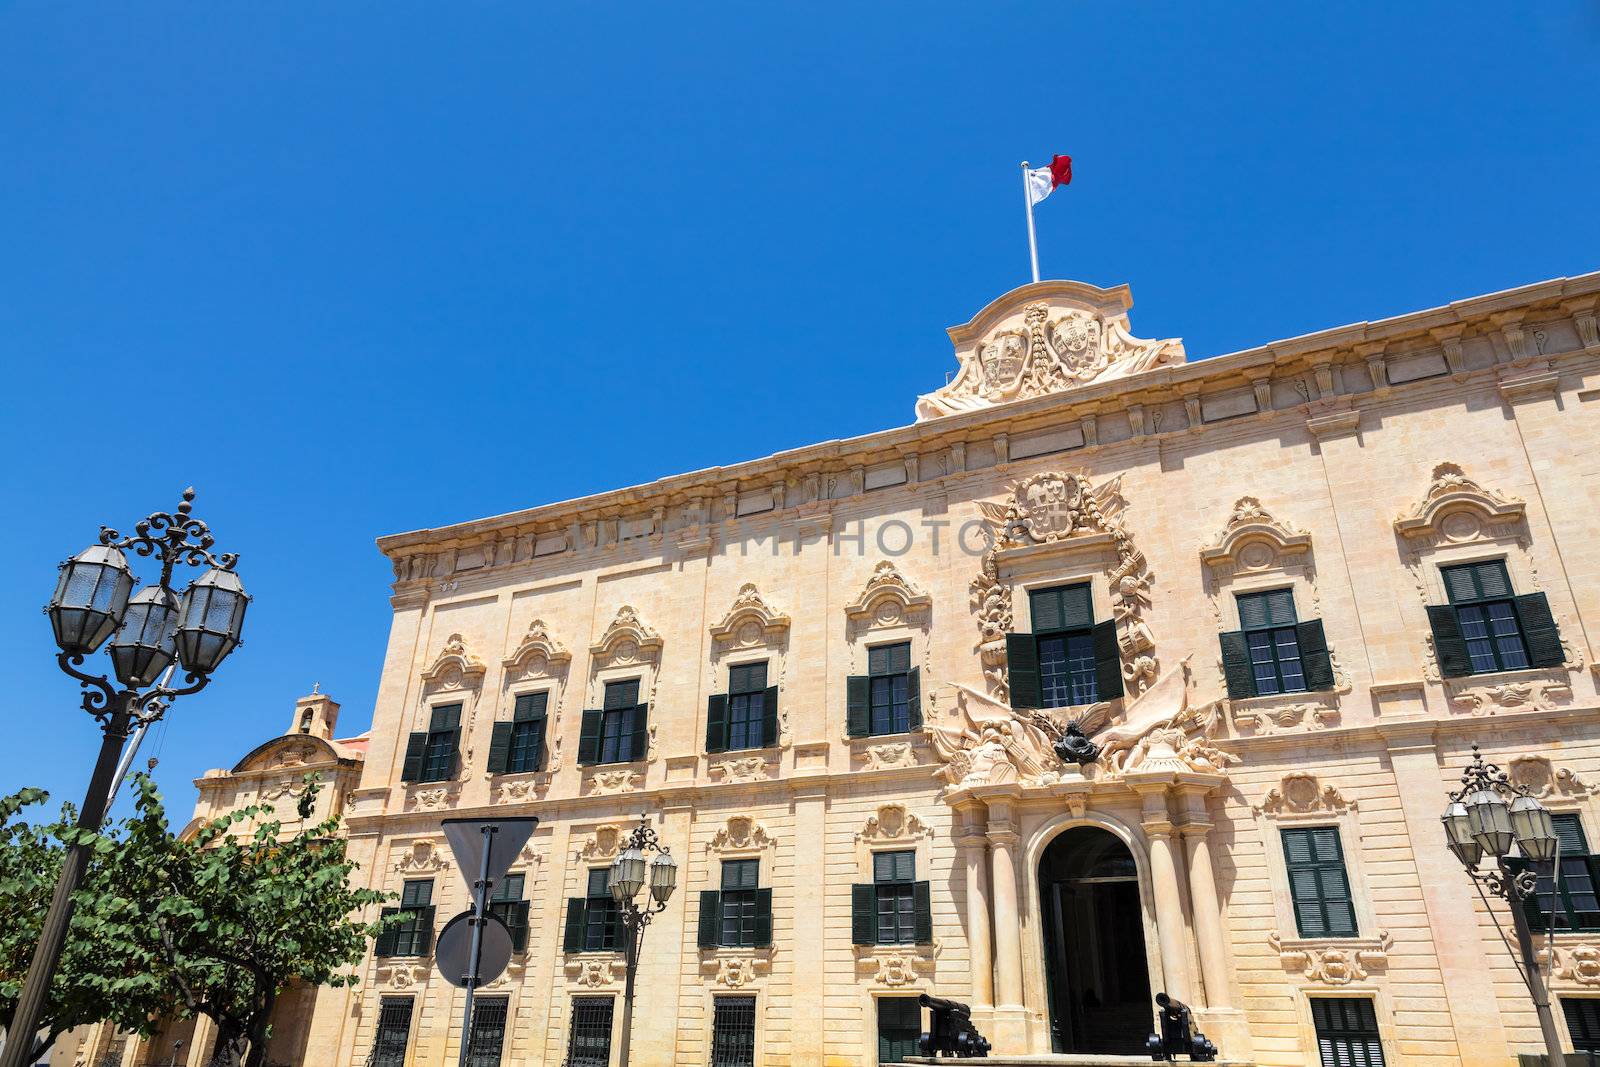 Auberge de Castille in Valletta, Malta - office of the Prime Minister of Malta